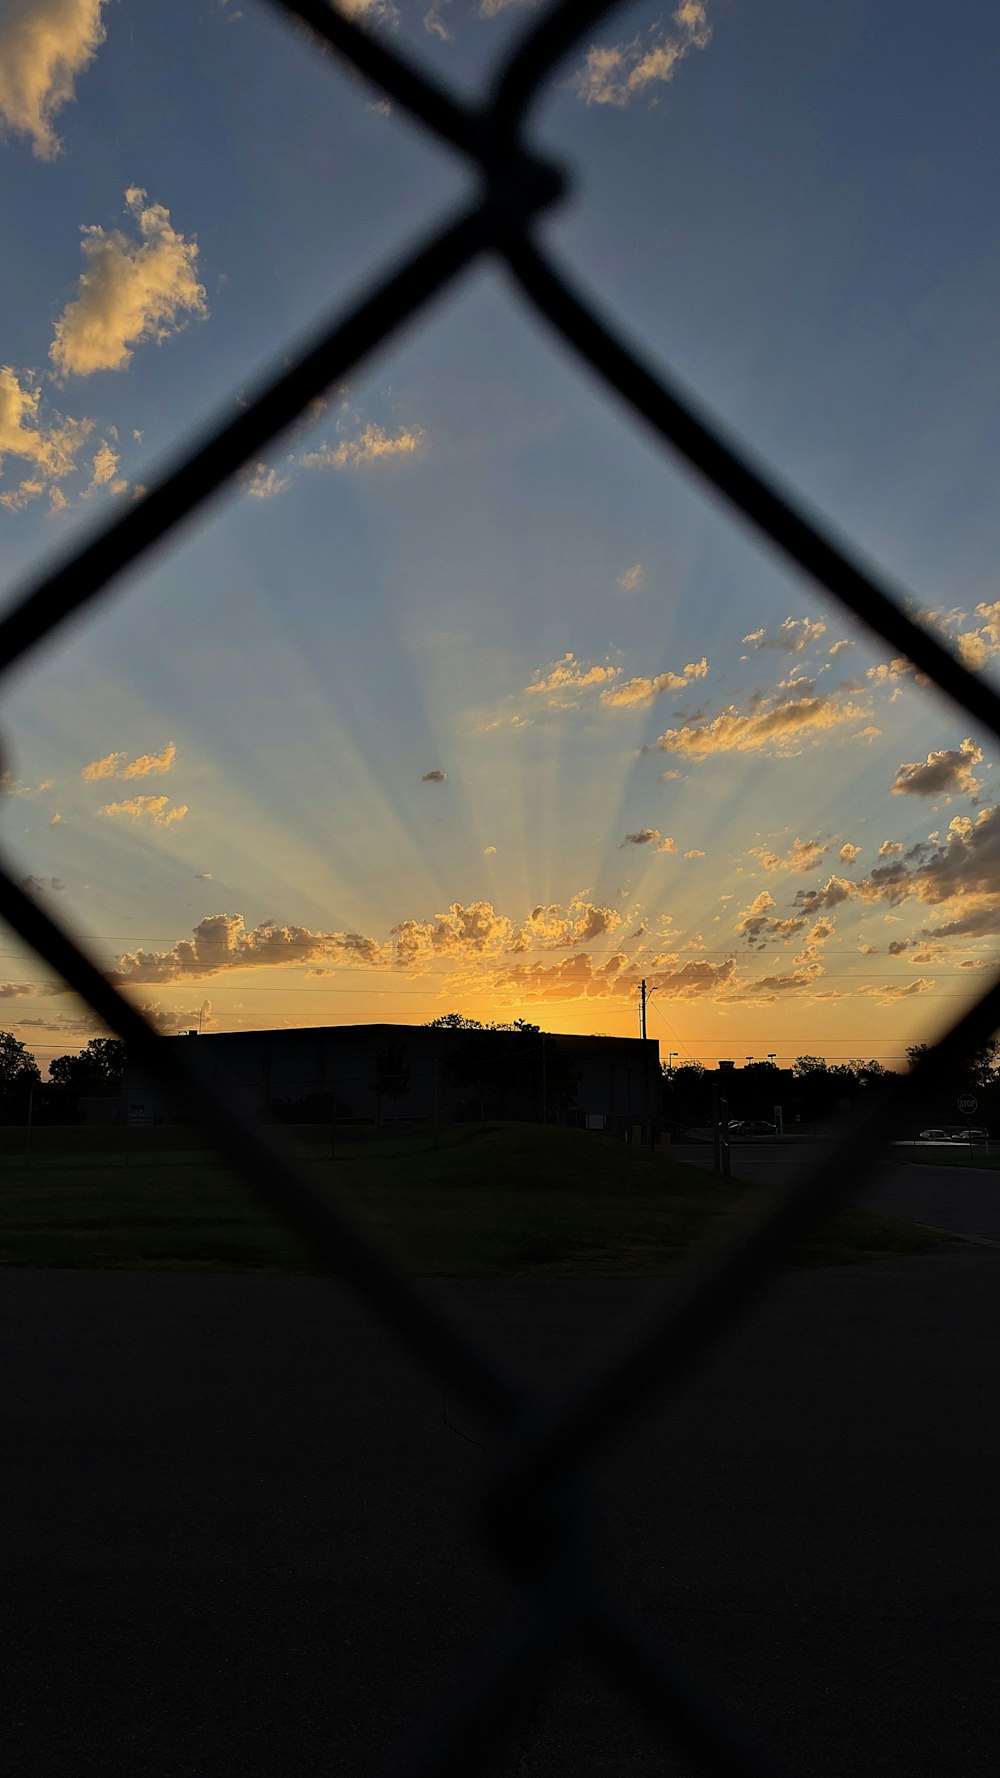 a sunset seen through a chain link fence